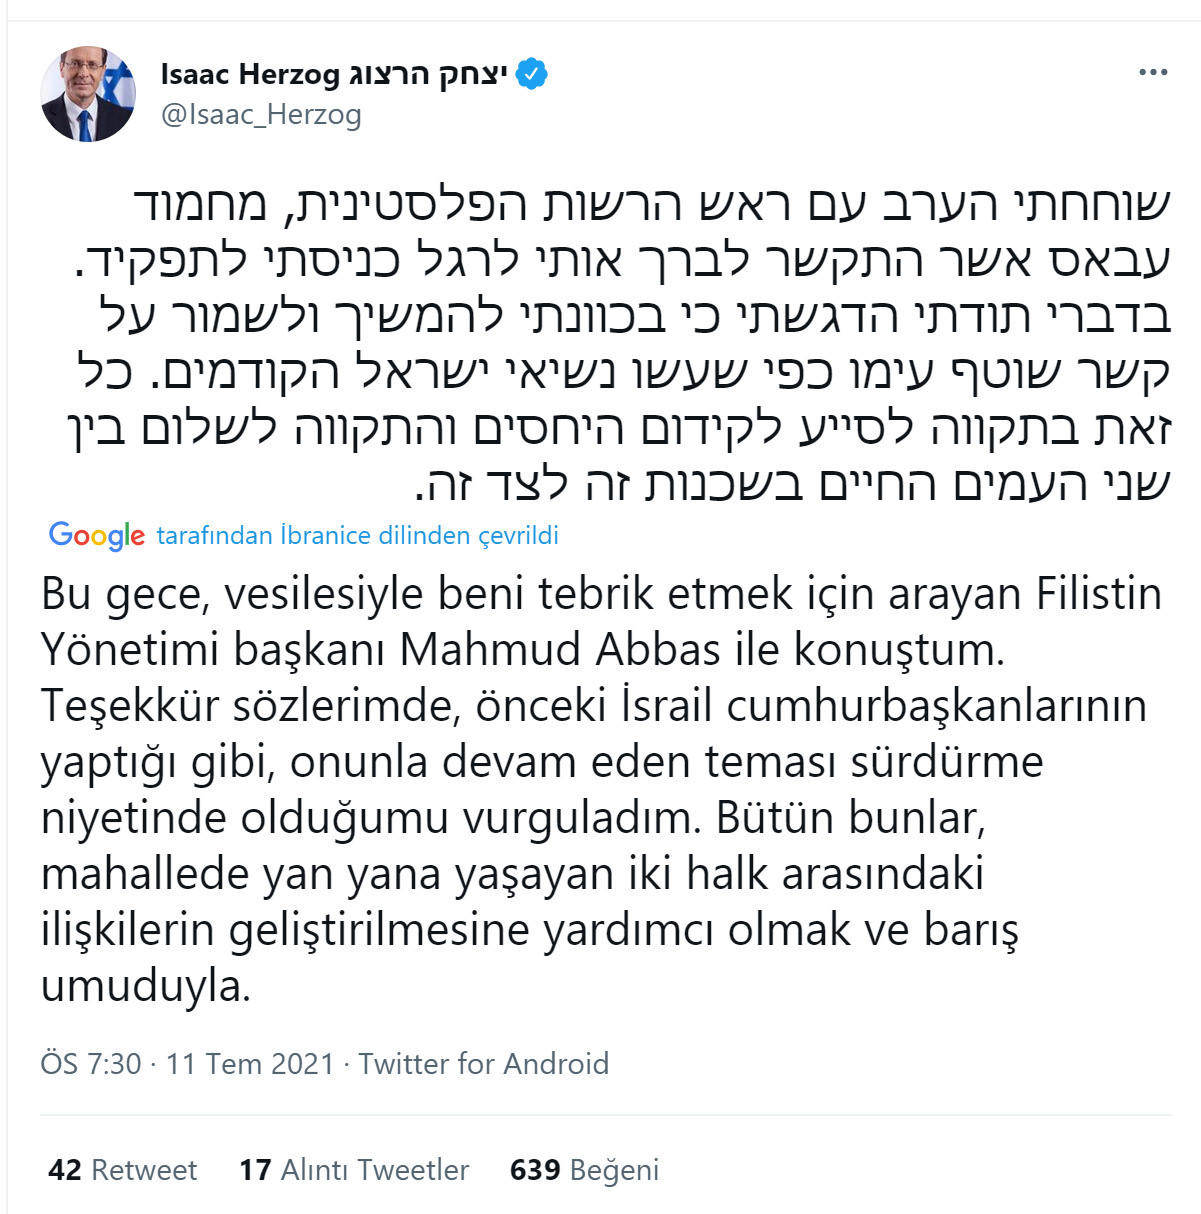 İsrail Cumhurbaşkanı Isaac Herzog'un Mahmud Abbas'la yaptığı gömrüşme ile ilgili tweeti.